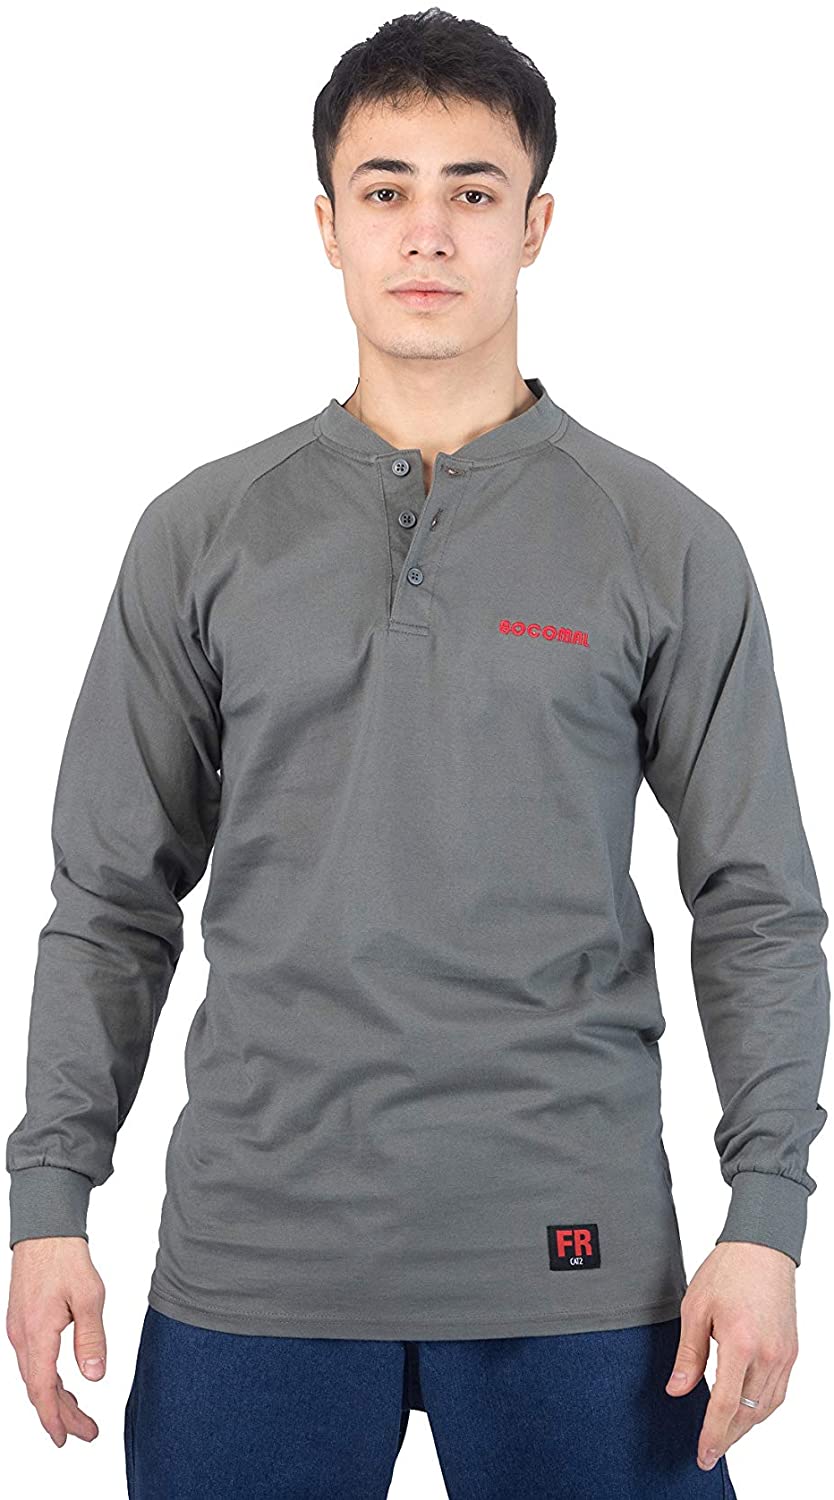 TICOMELA FR T Shirt Flame Resistant Shirt 5.5oz 100% Cotton Light Weight Workwear Men's Long Sleeve Henley Shirts 